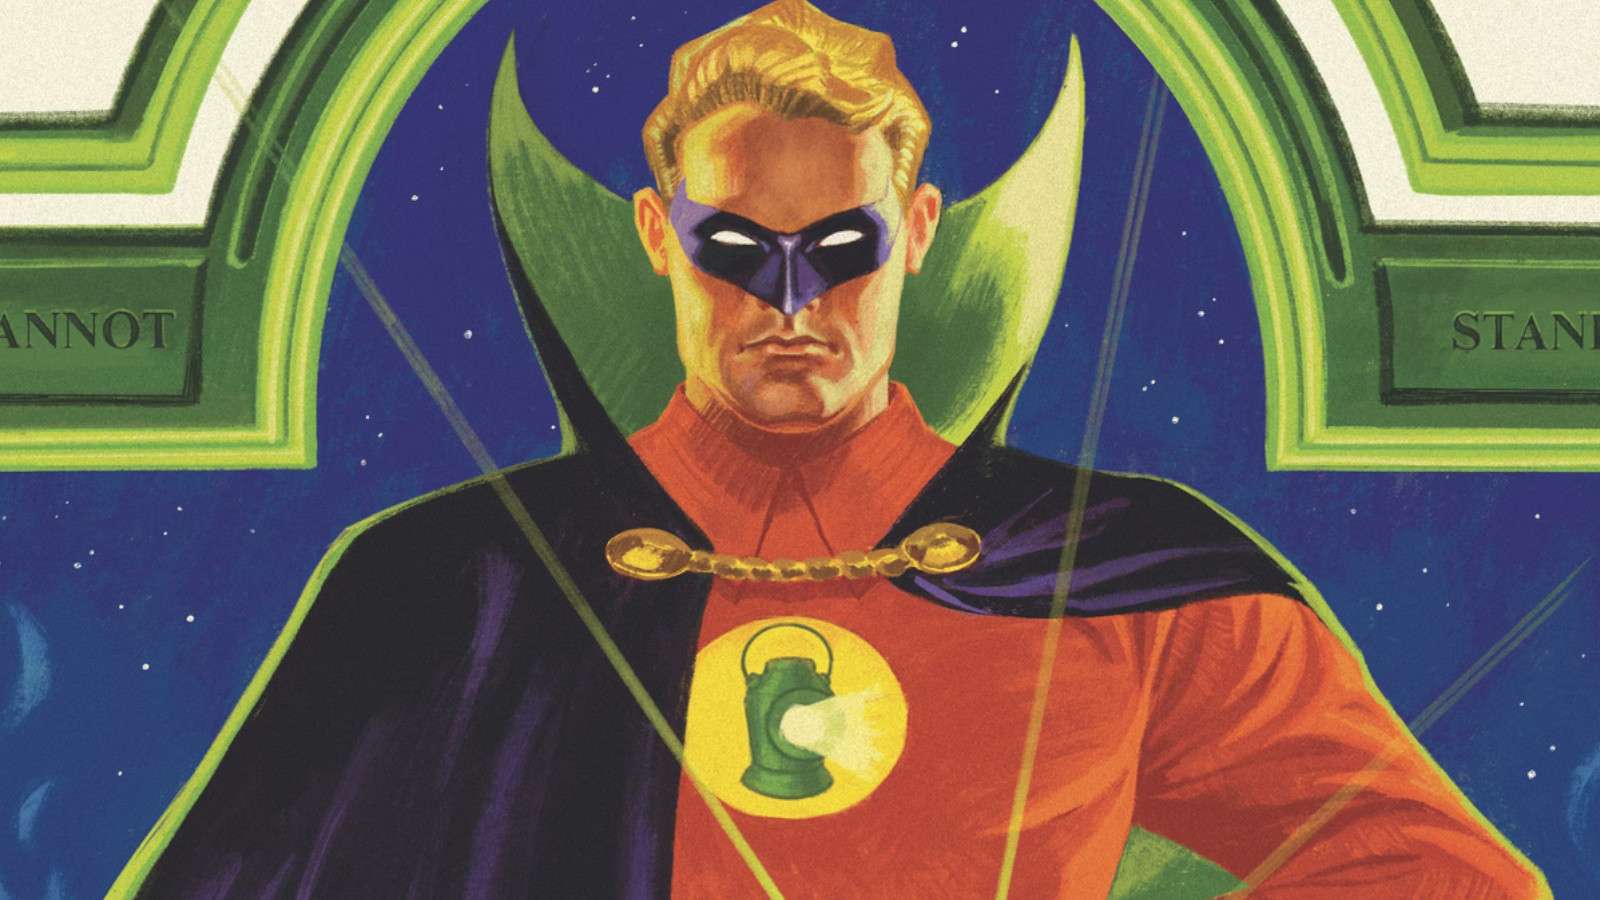 Alan Scott: The Green Lantern #1 cover art